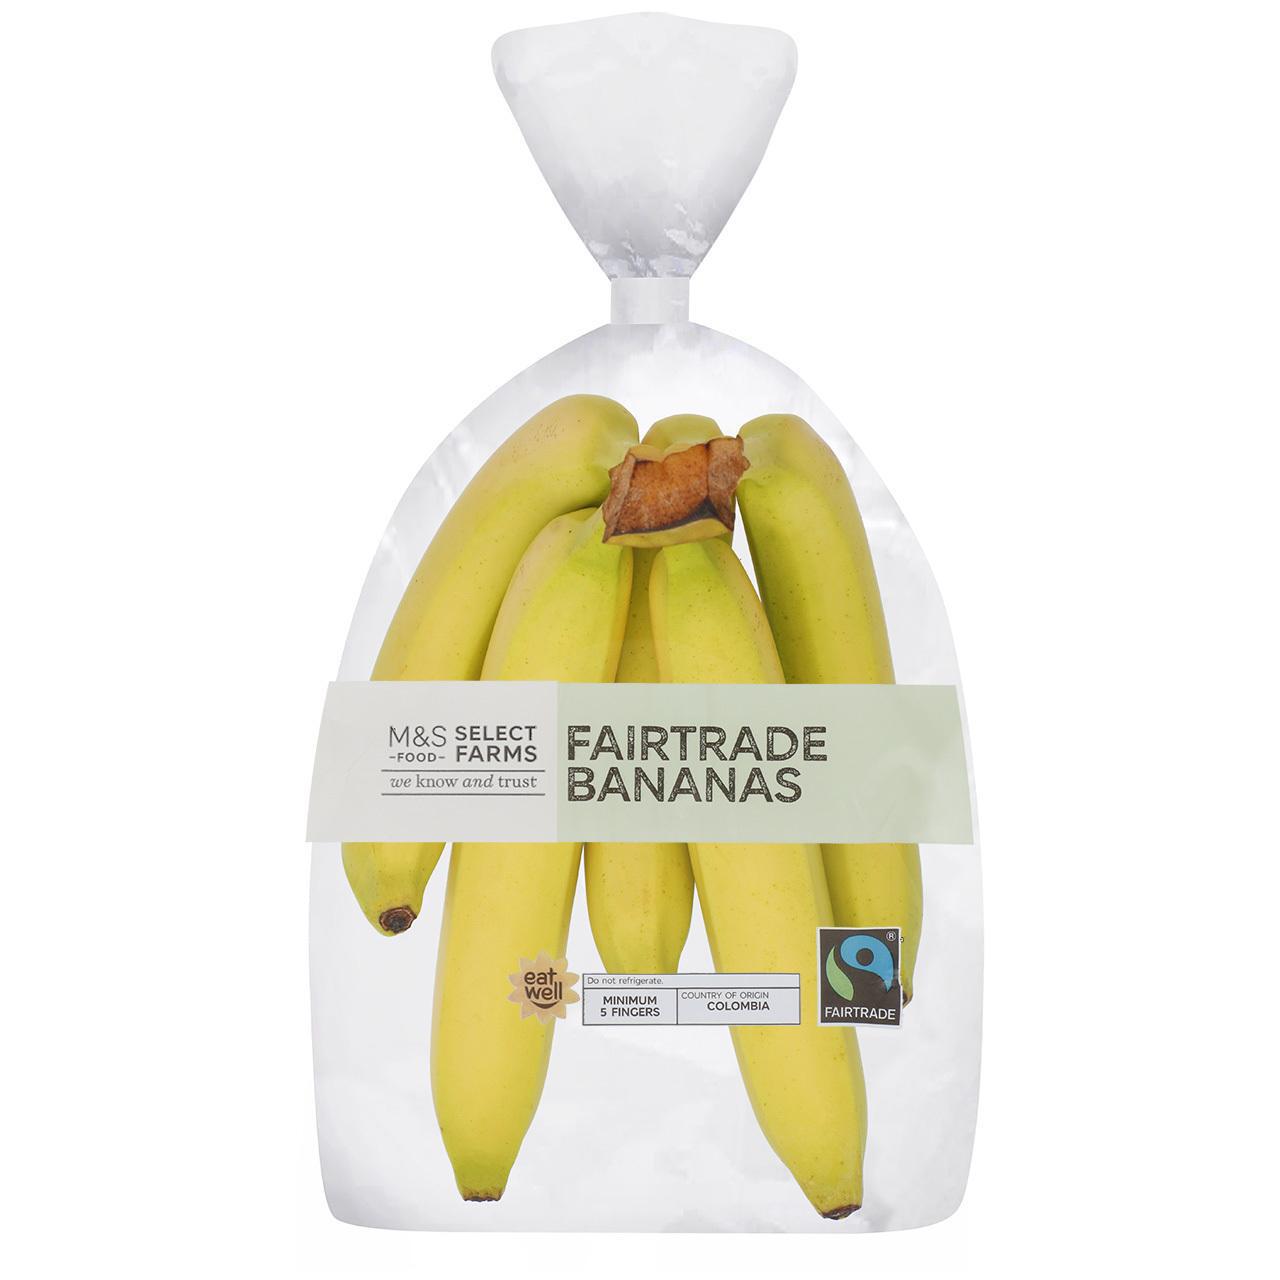 M&S Fairtrade Bananas 6 per pack